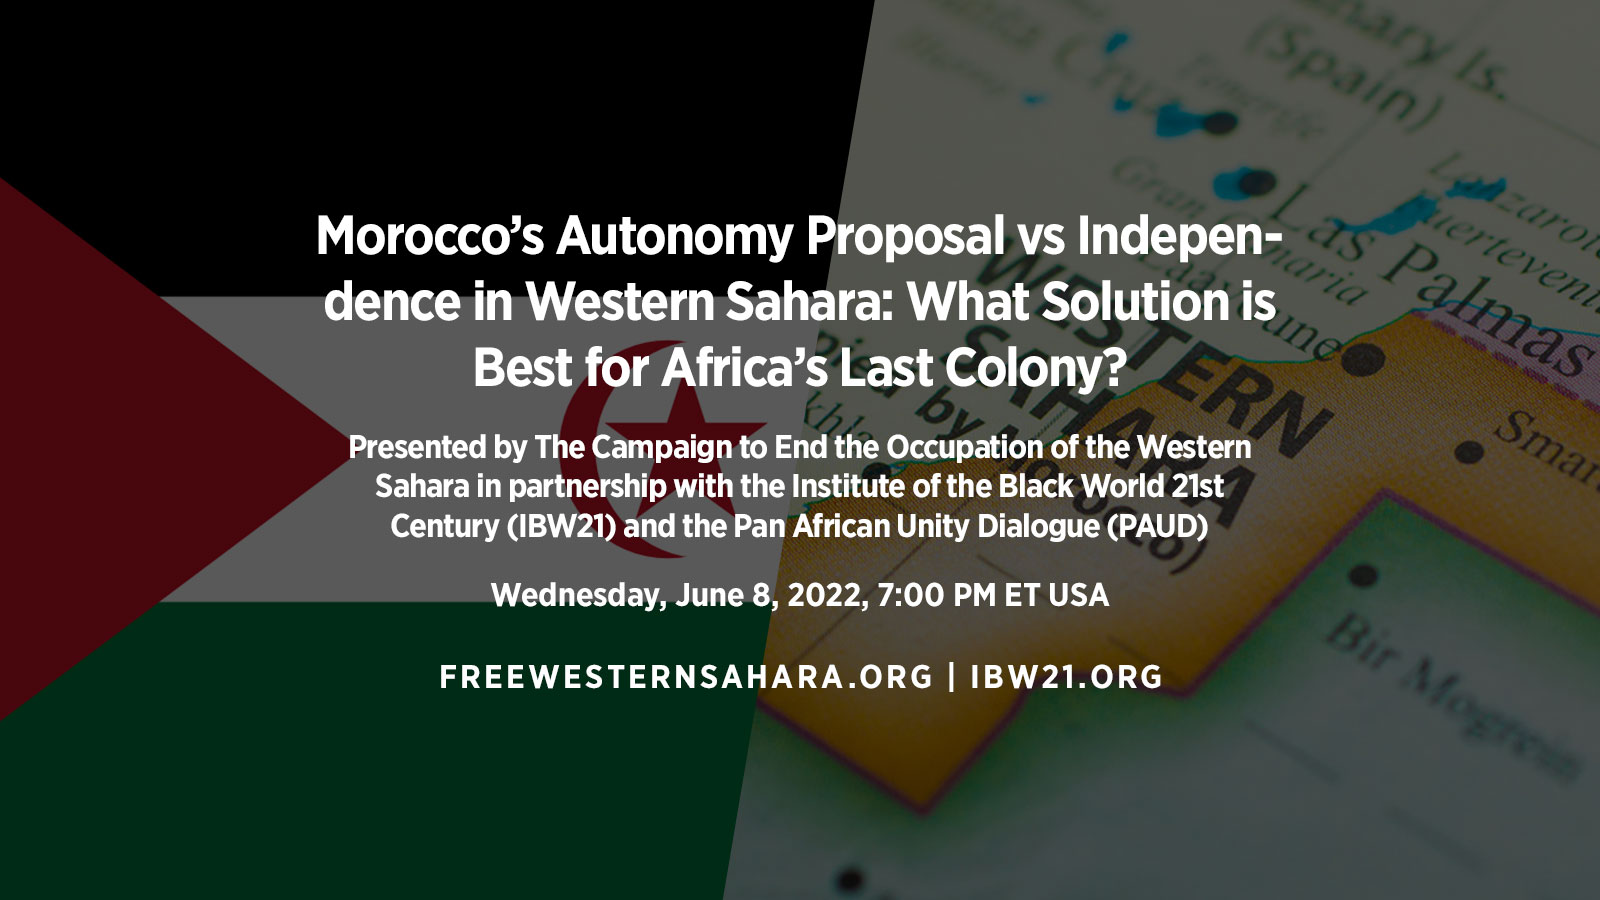 Wednesday, June 8, 2022 7:00 PM ET USA — Webinar: Morocco's Autonomy Proposal vs Independence in Western Sahara. Host: Bill Fletcher, Jr. Panelists: Katlyn Thomas and Stephen Zunes